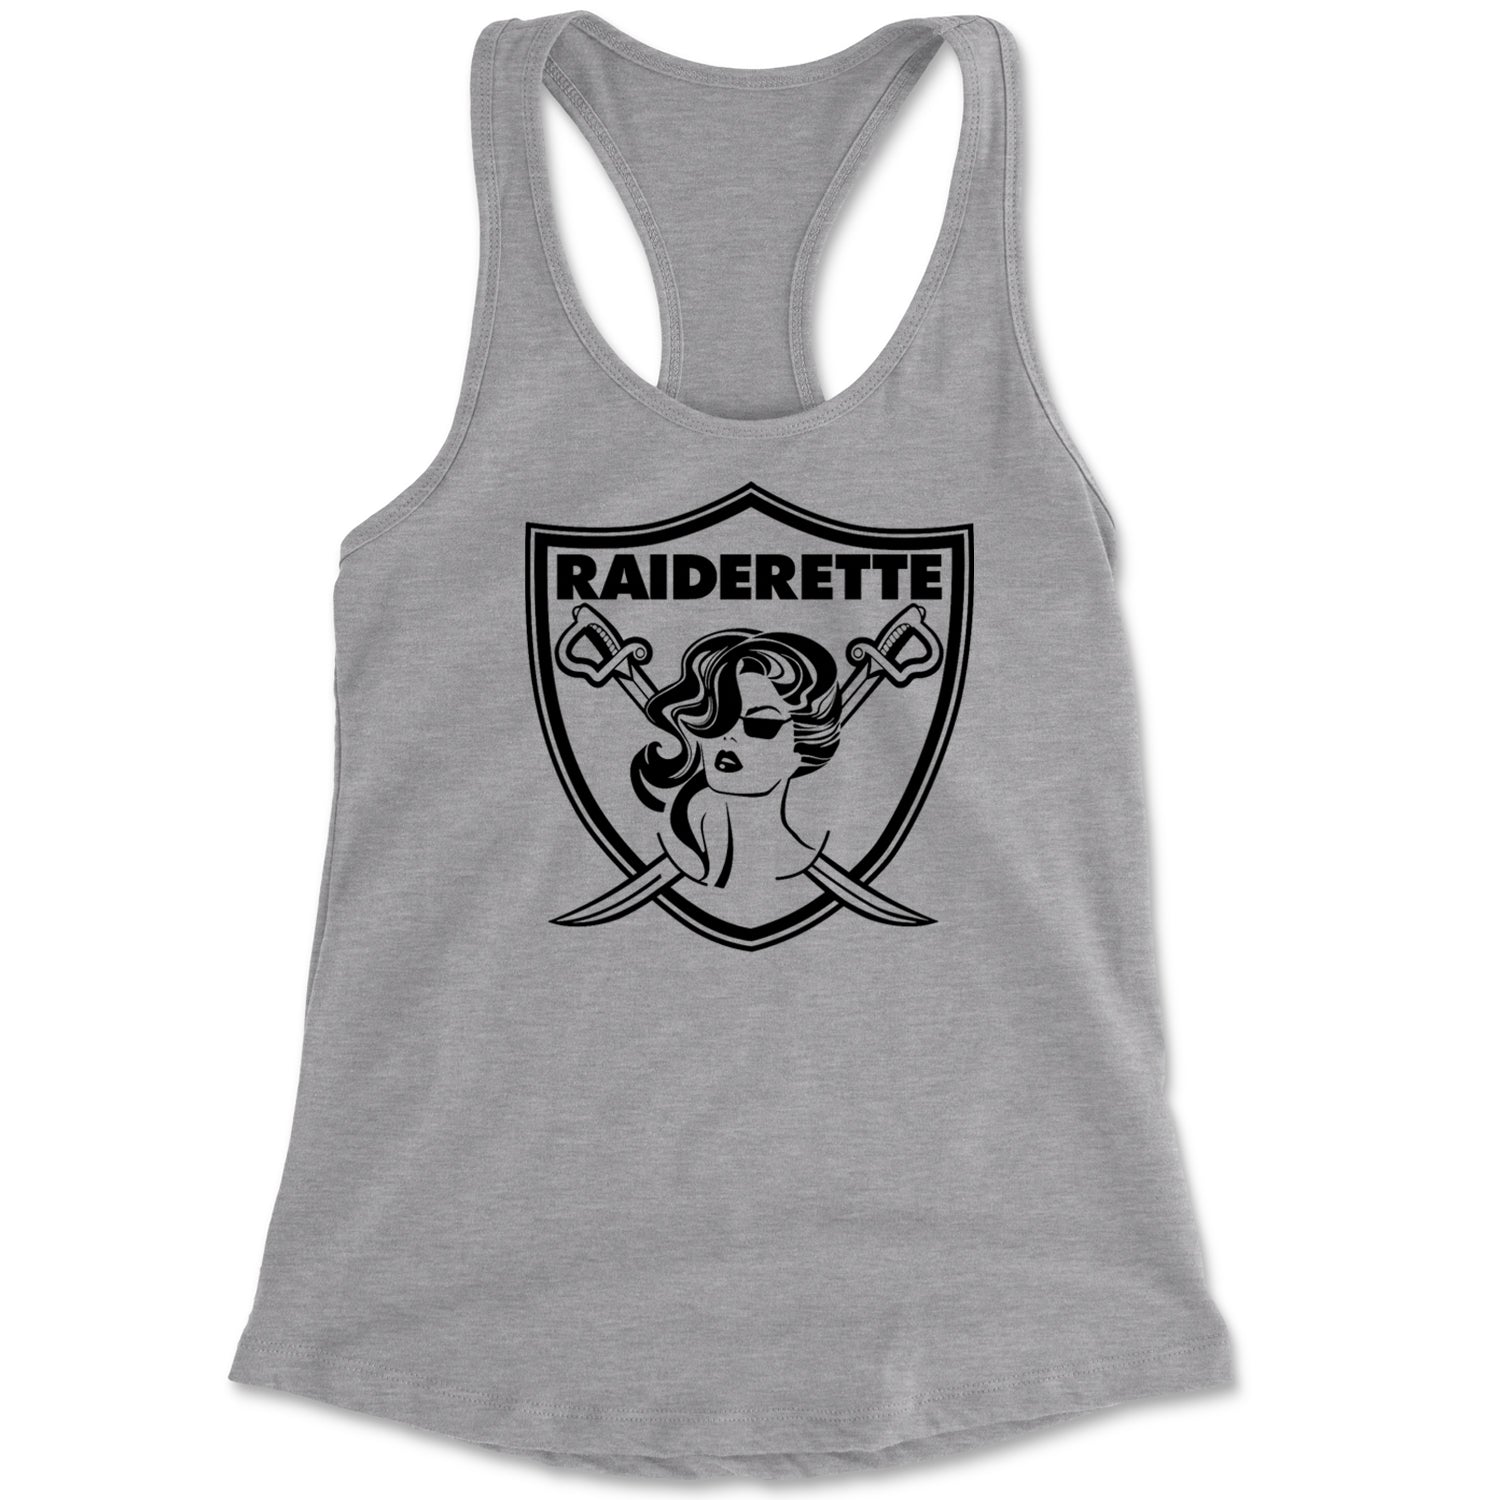 Raiderette Football Gameday Ready Racerback Tank Top for Women